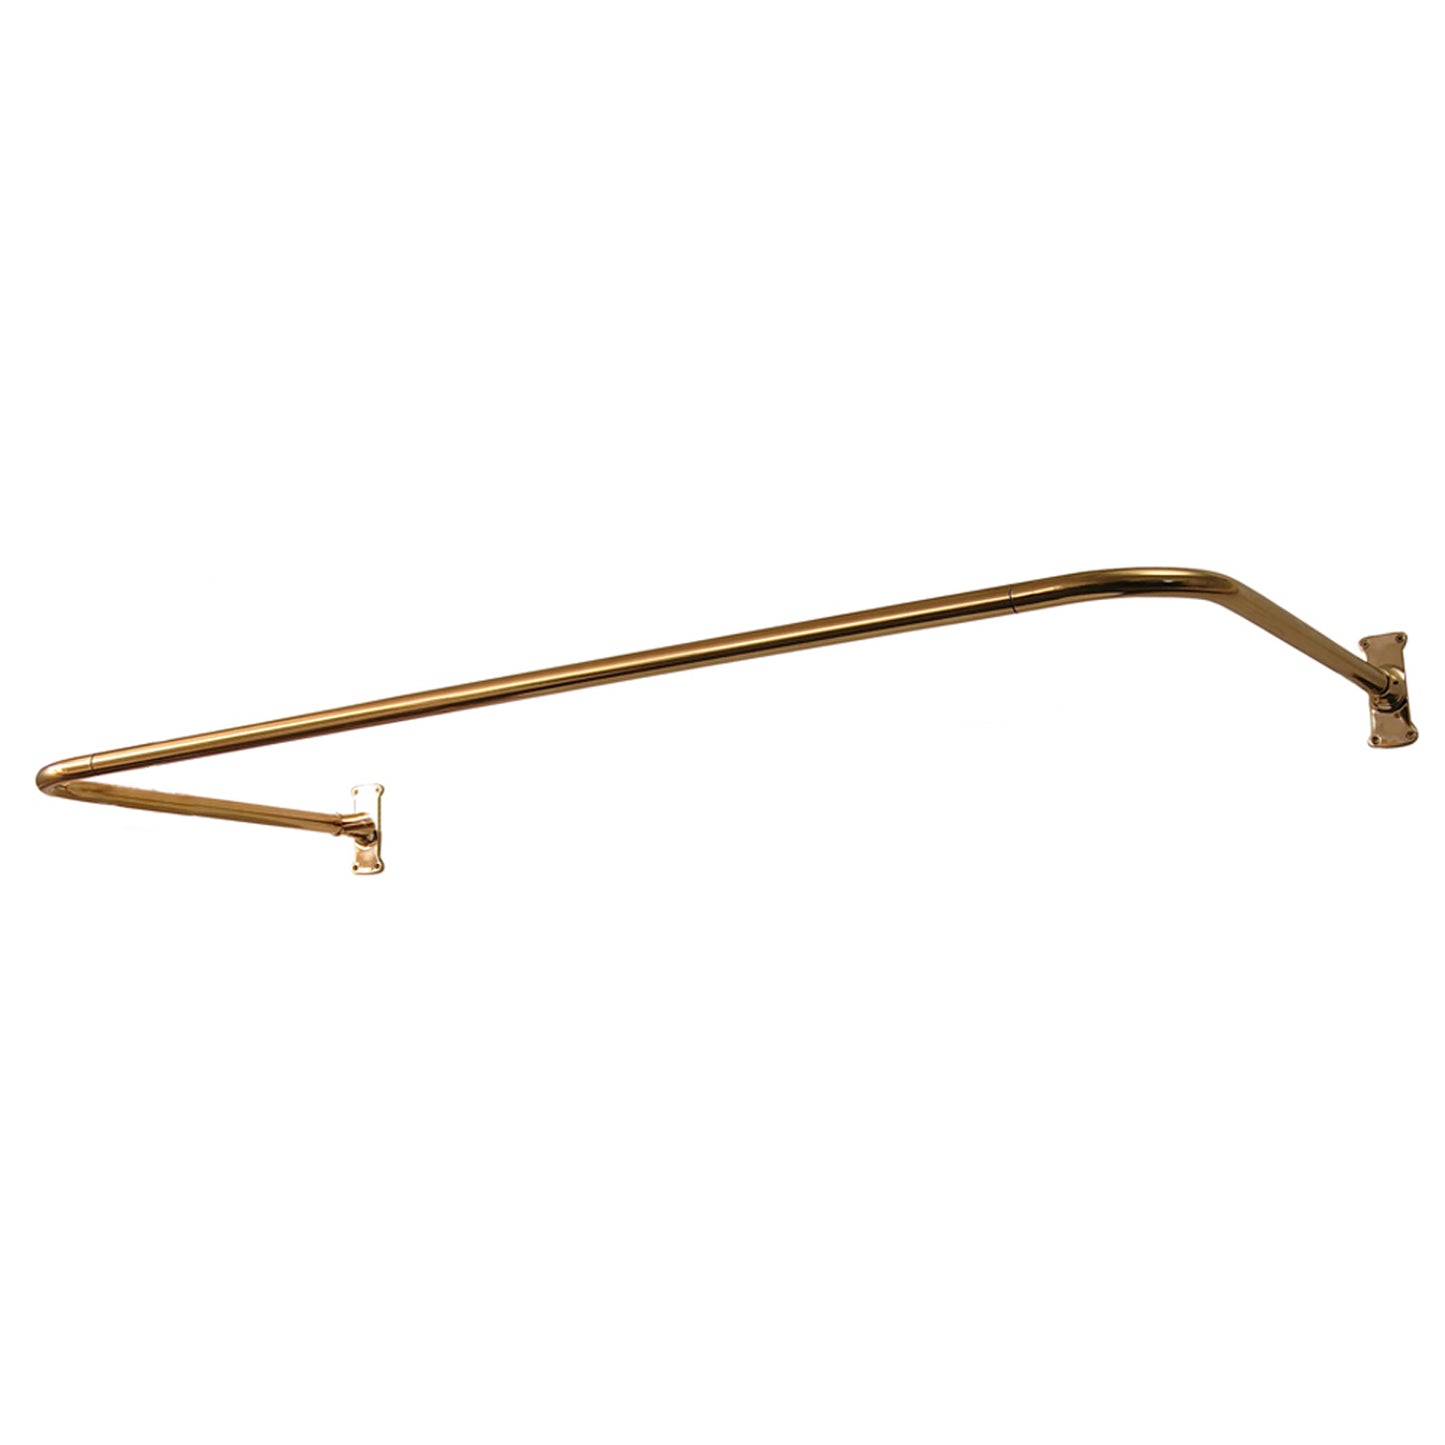 4140 U Shaped Shower Rod, 60 x 26" w/Flanges, Polished Brass